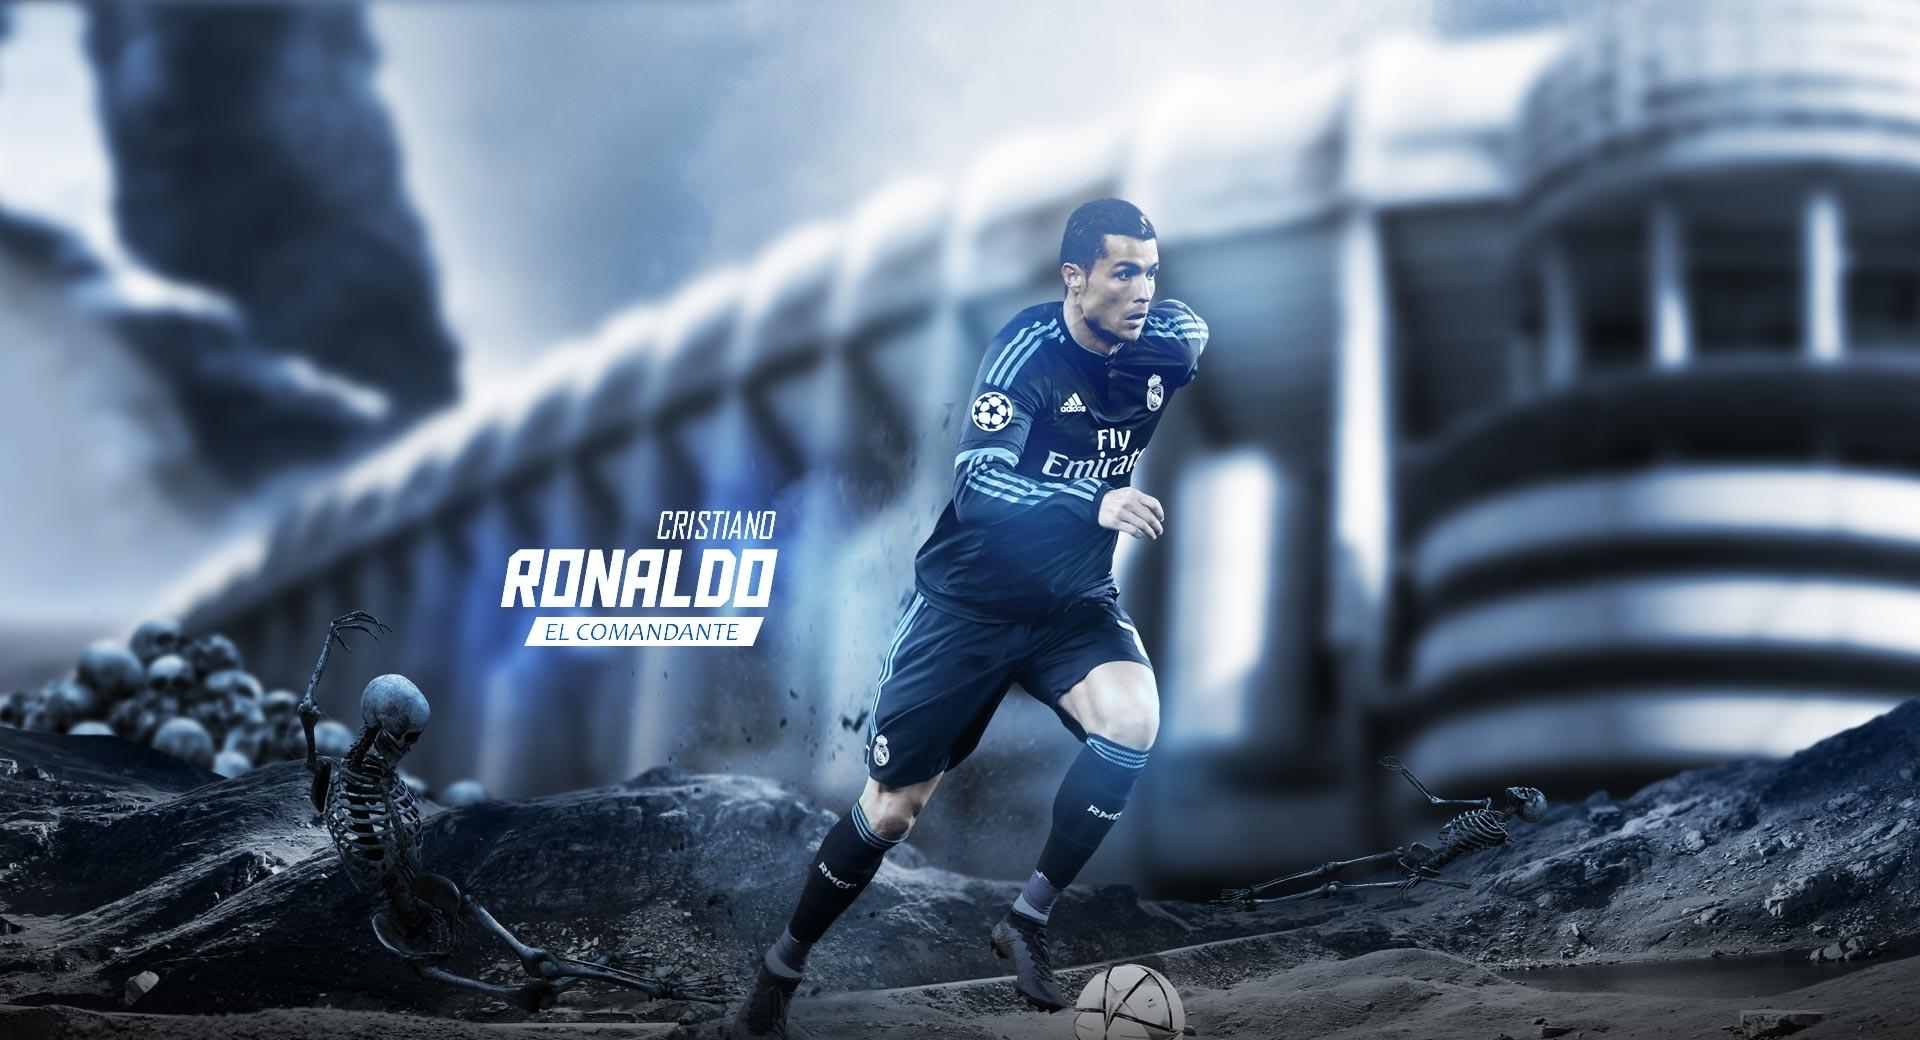 Cristiano Ronaldo - El Comandante at 2048 x 2048 iPad size wallpapers HD quality